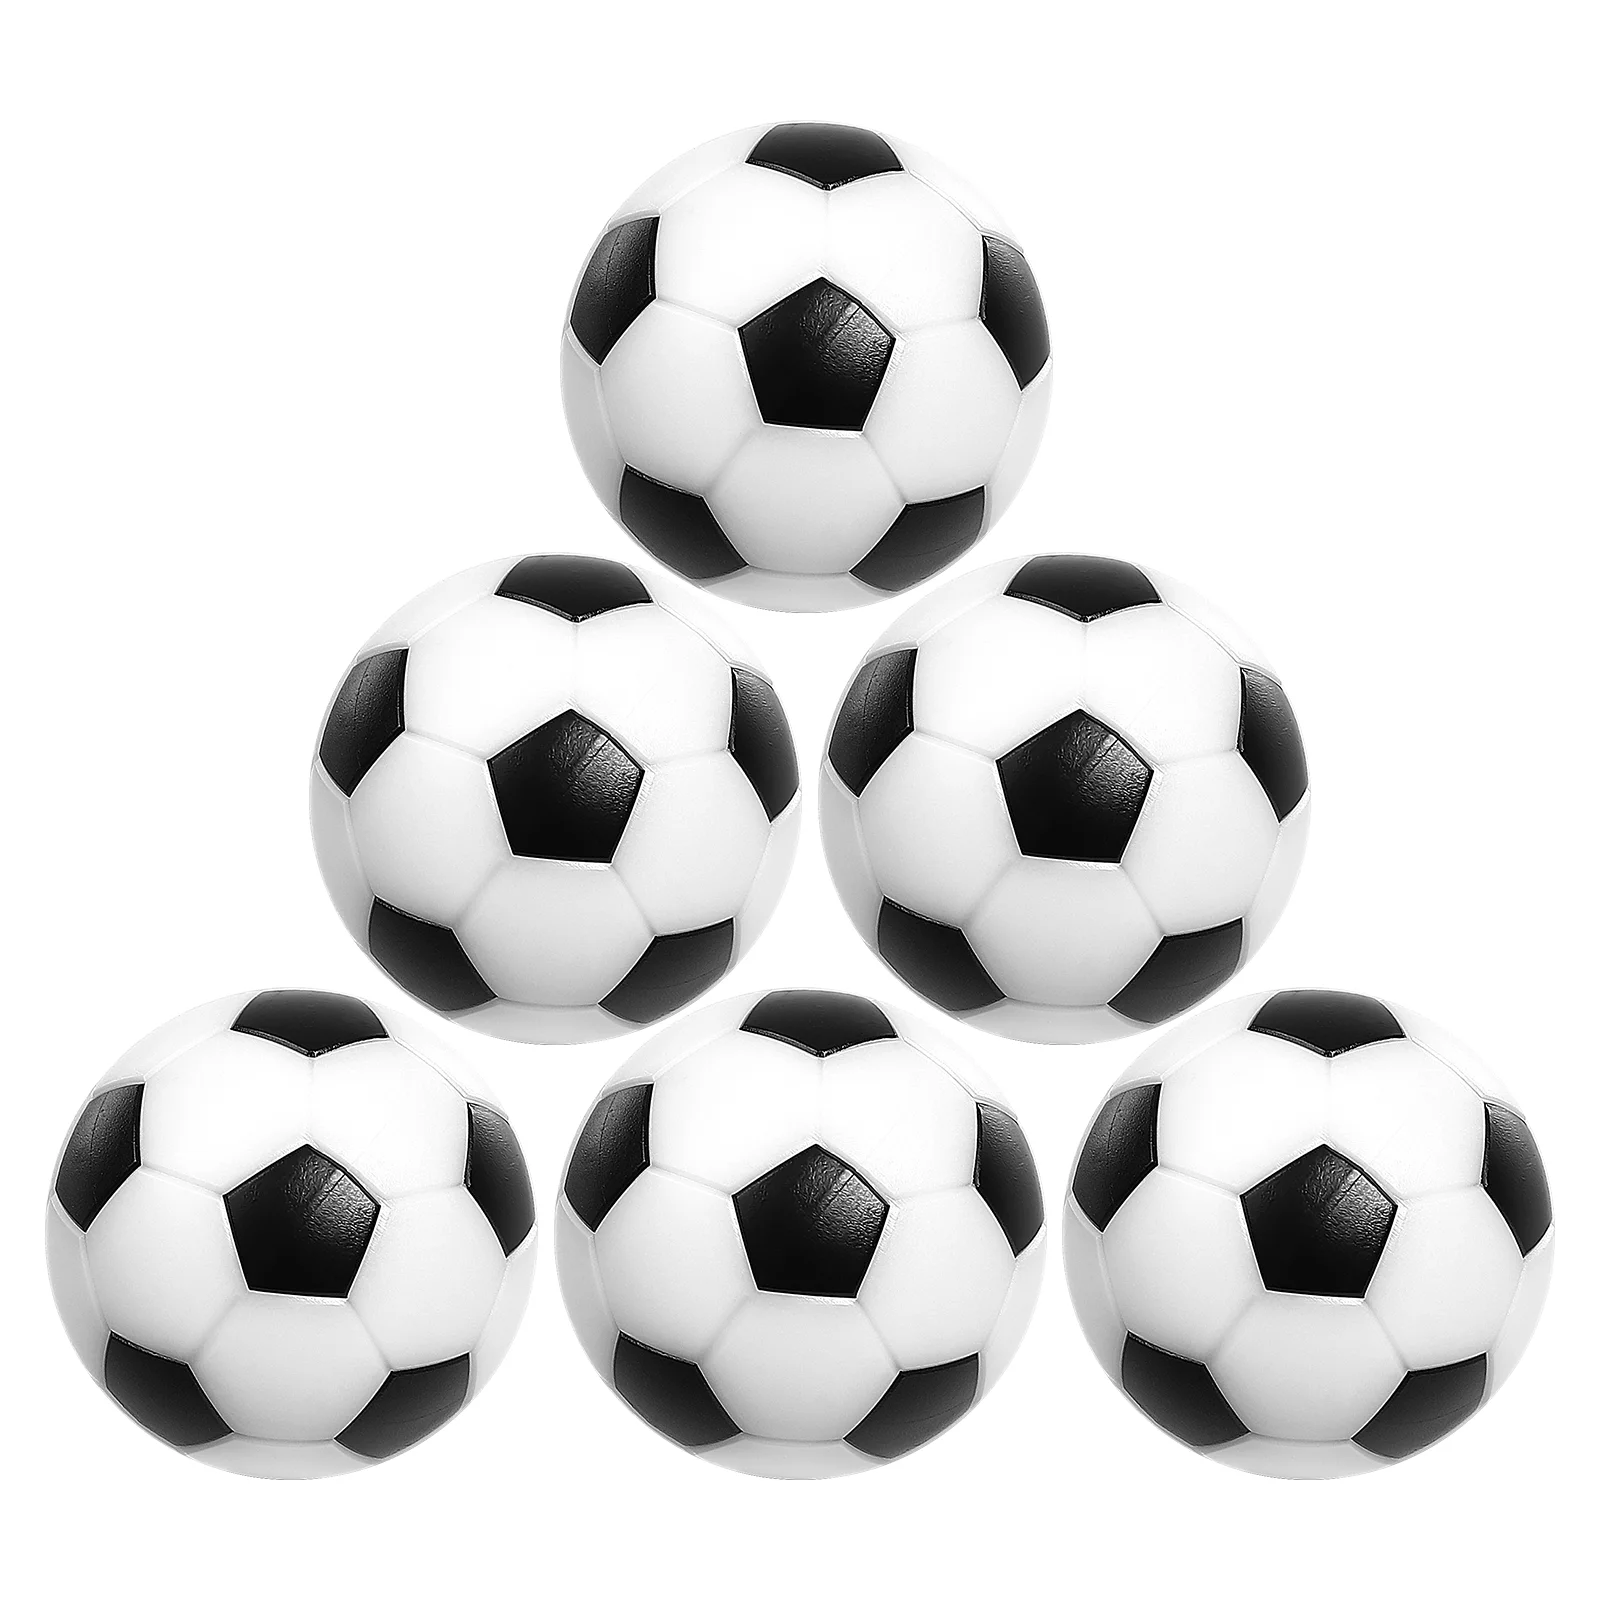 6pcs Table Football Toys Small Soccer Balls Mini Football Black and White Table Soccer Balls (32mm)